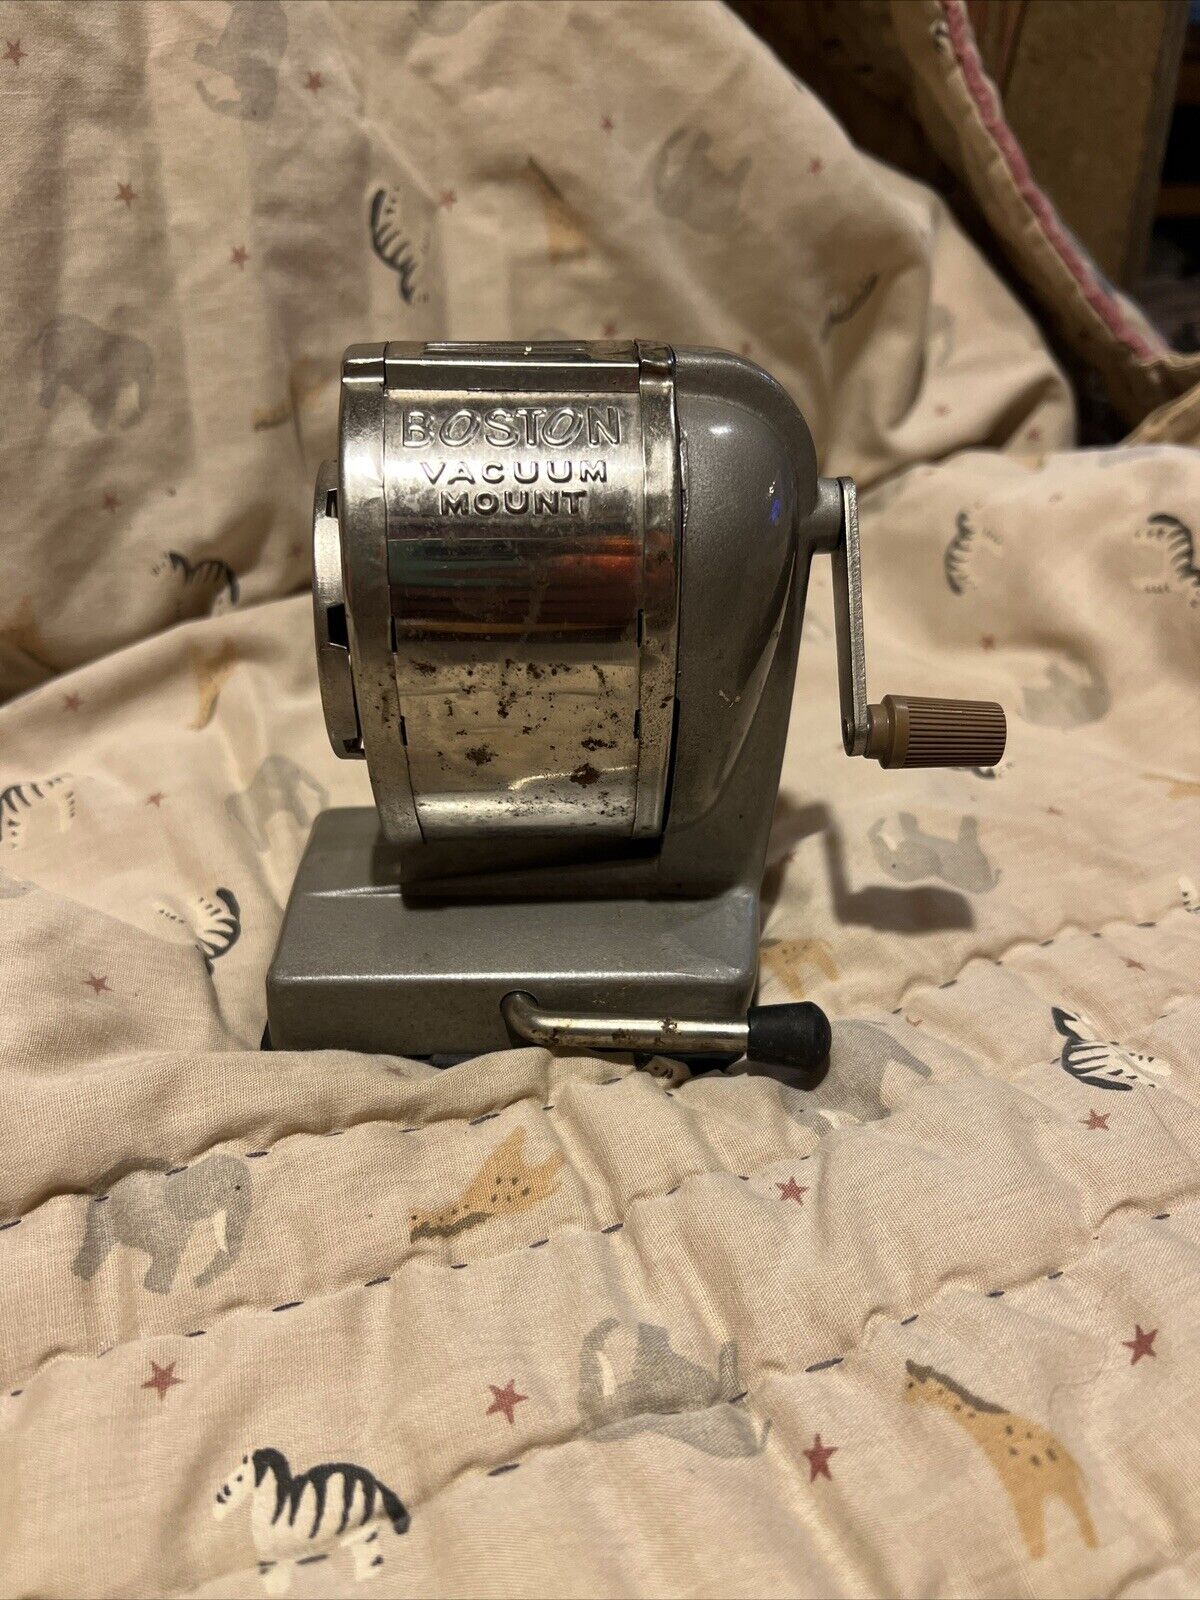 vintage boston vacuum mount pencil sharpener